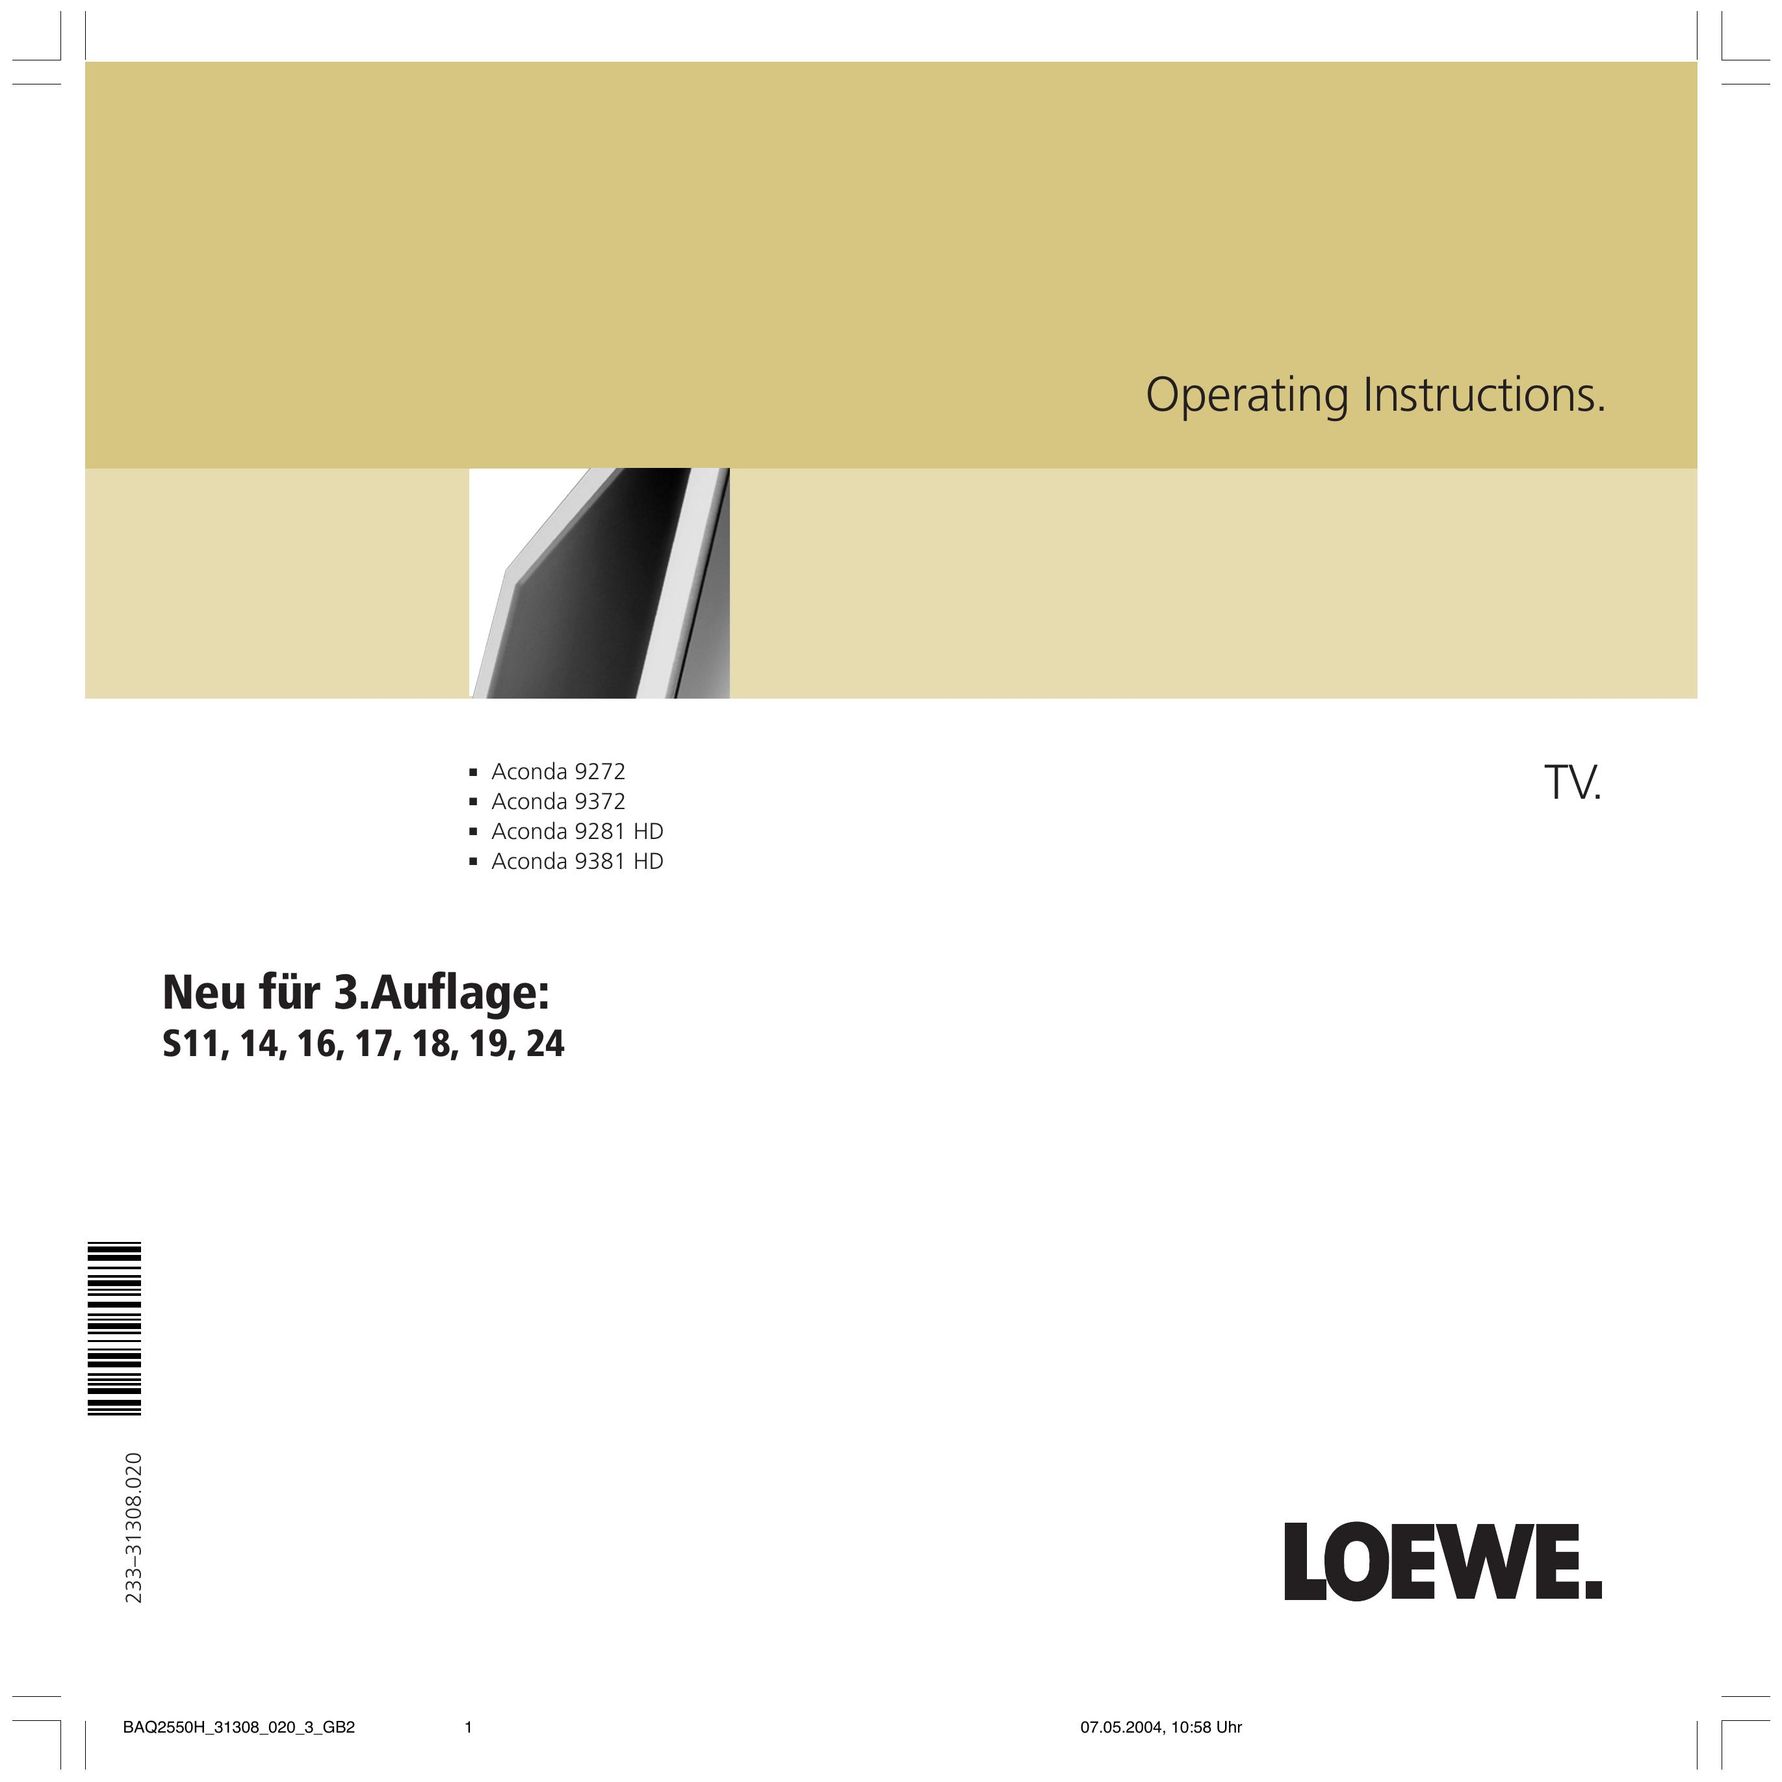 Loewe 9381 HD Flat Panel Television User Manual